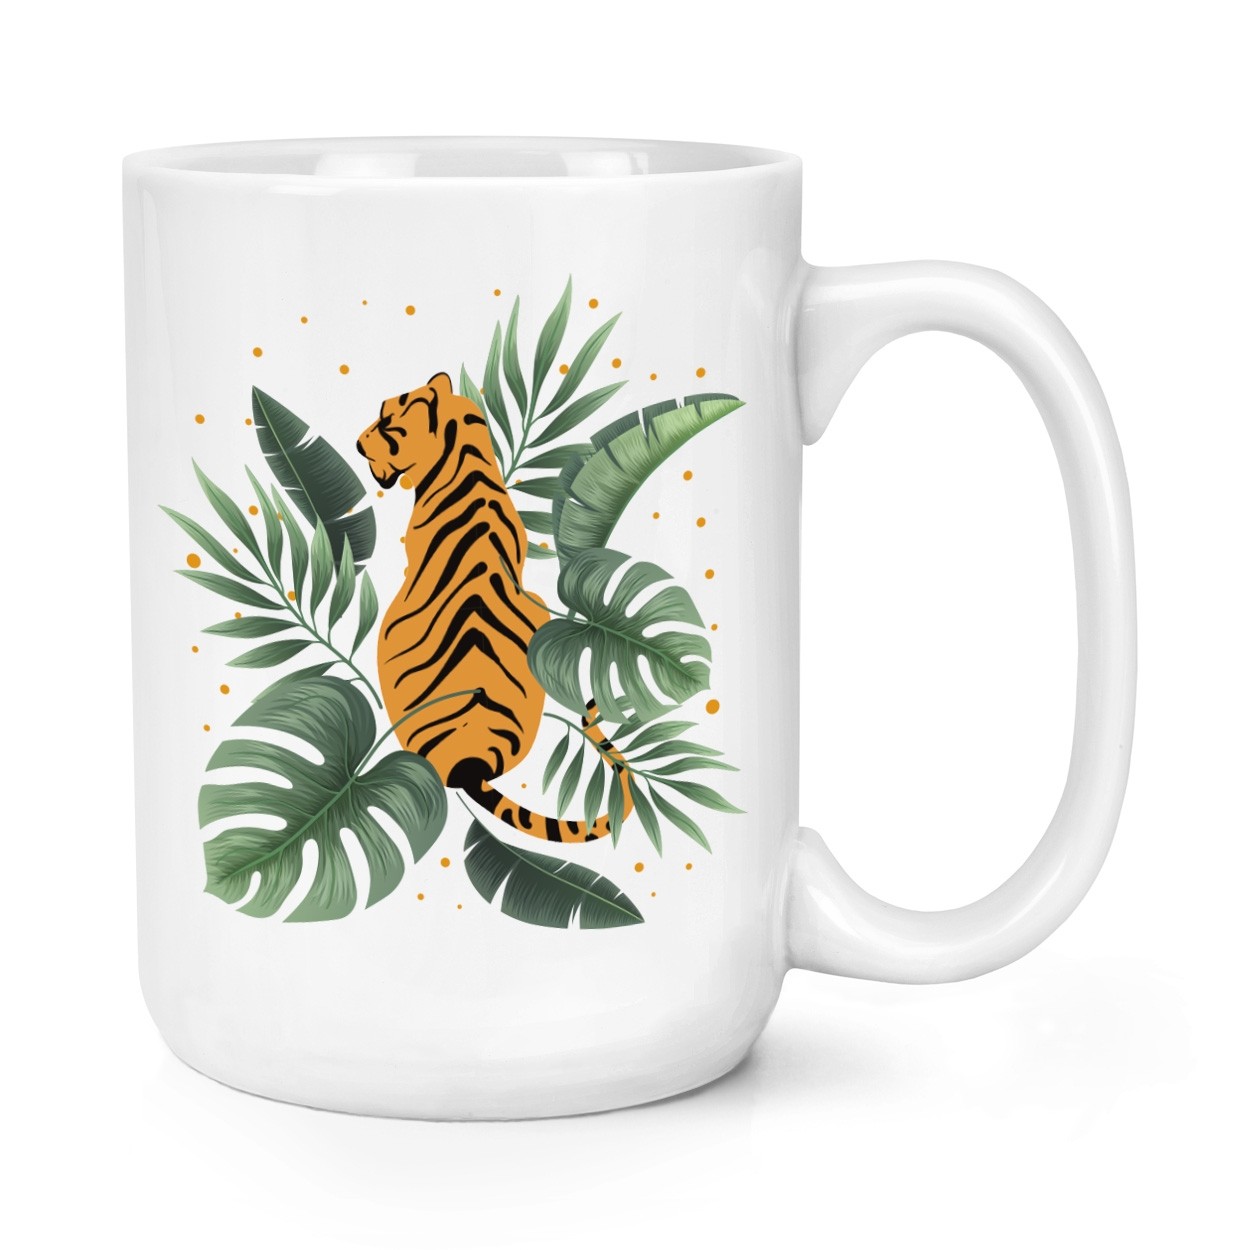 Tiger Jungle Tropical Theme 15oz Large Mug Cup